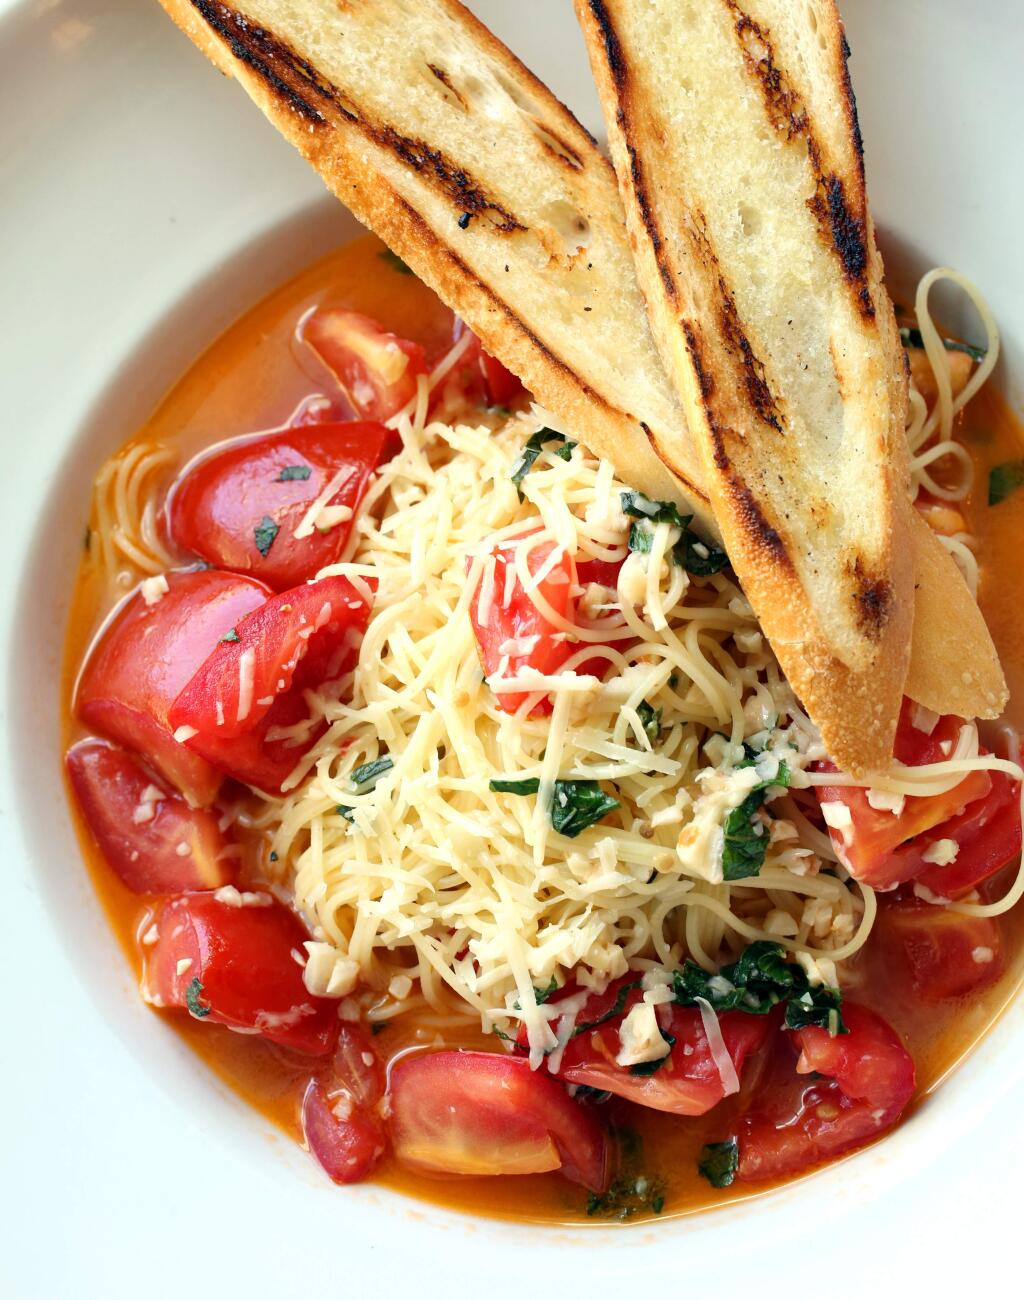 Tomato Basil Pasta served at The Hole in the Wall Restaurant in Sebastopol, Friday, July 11, 2014. (Crista Jeremiason / The Press Democrat)